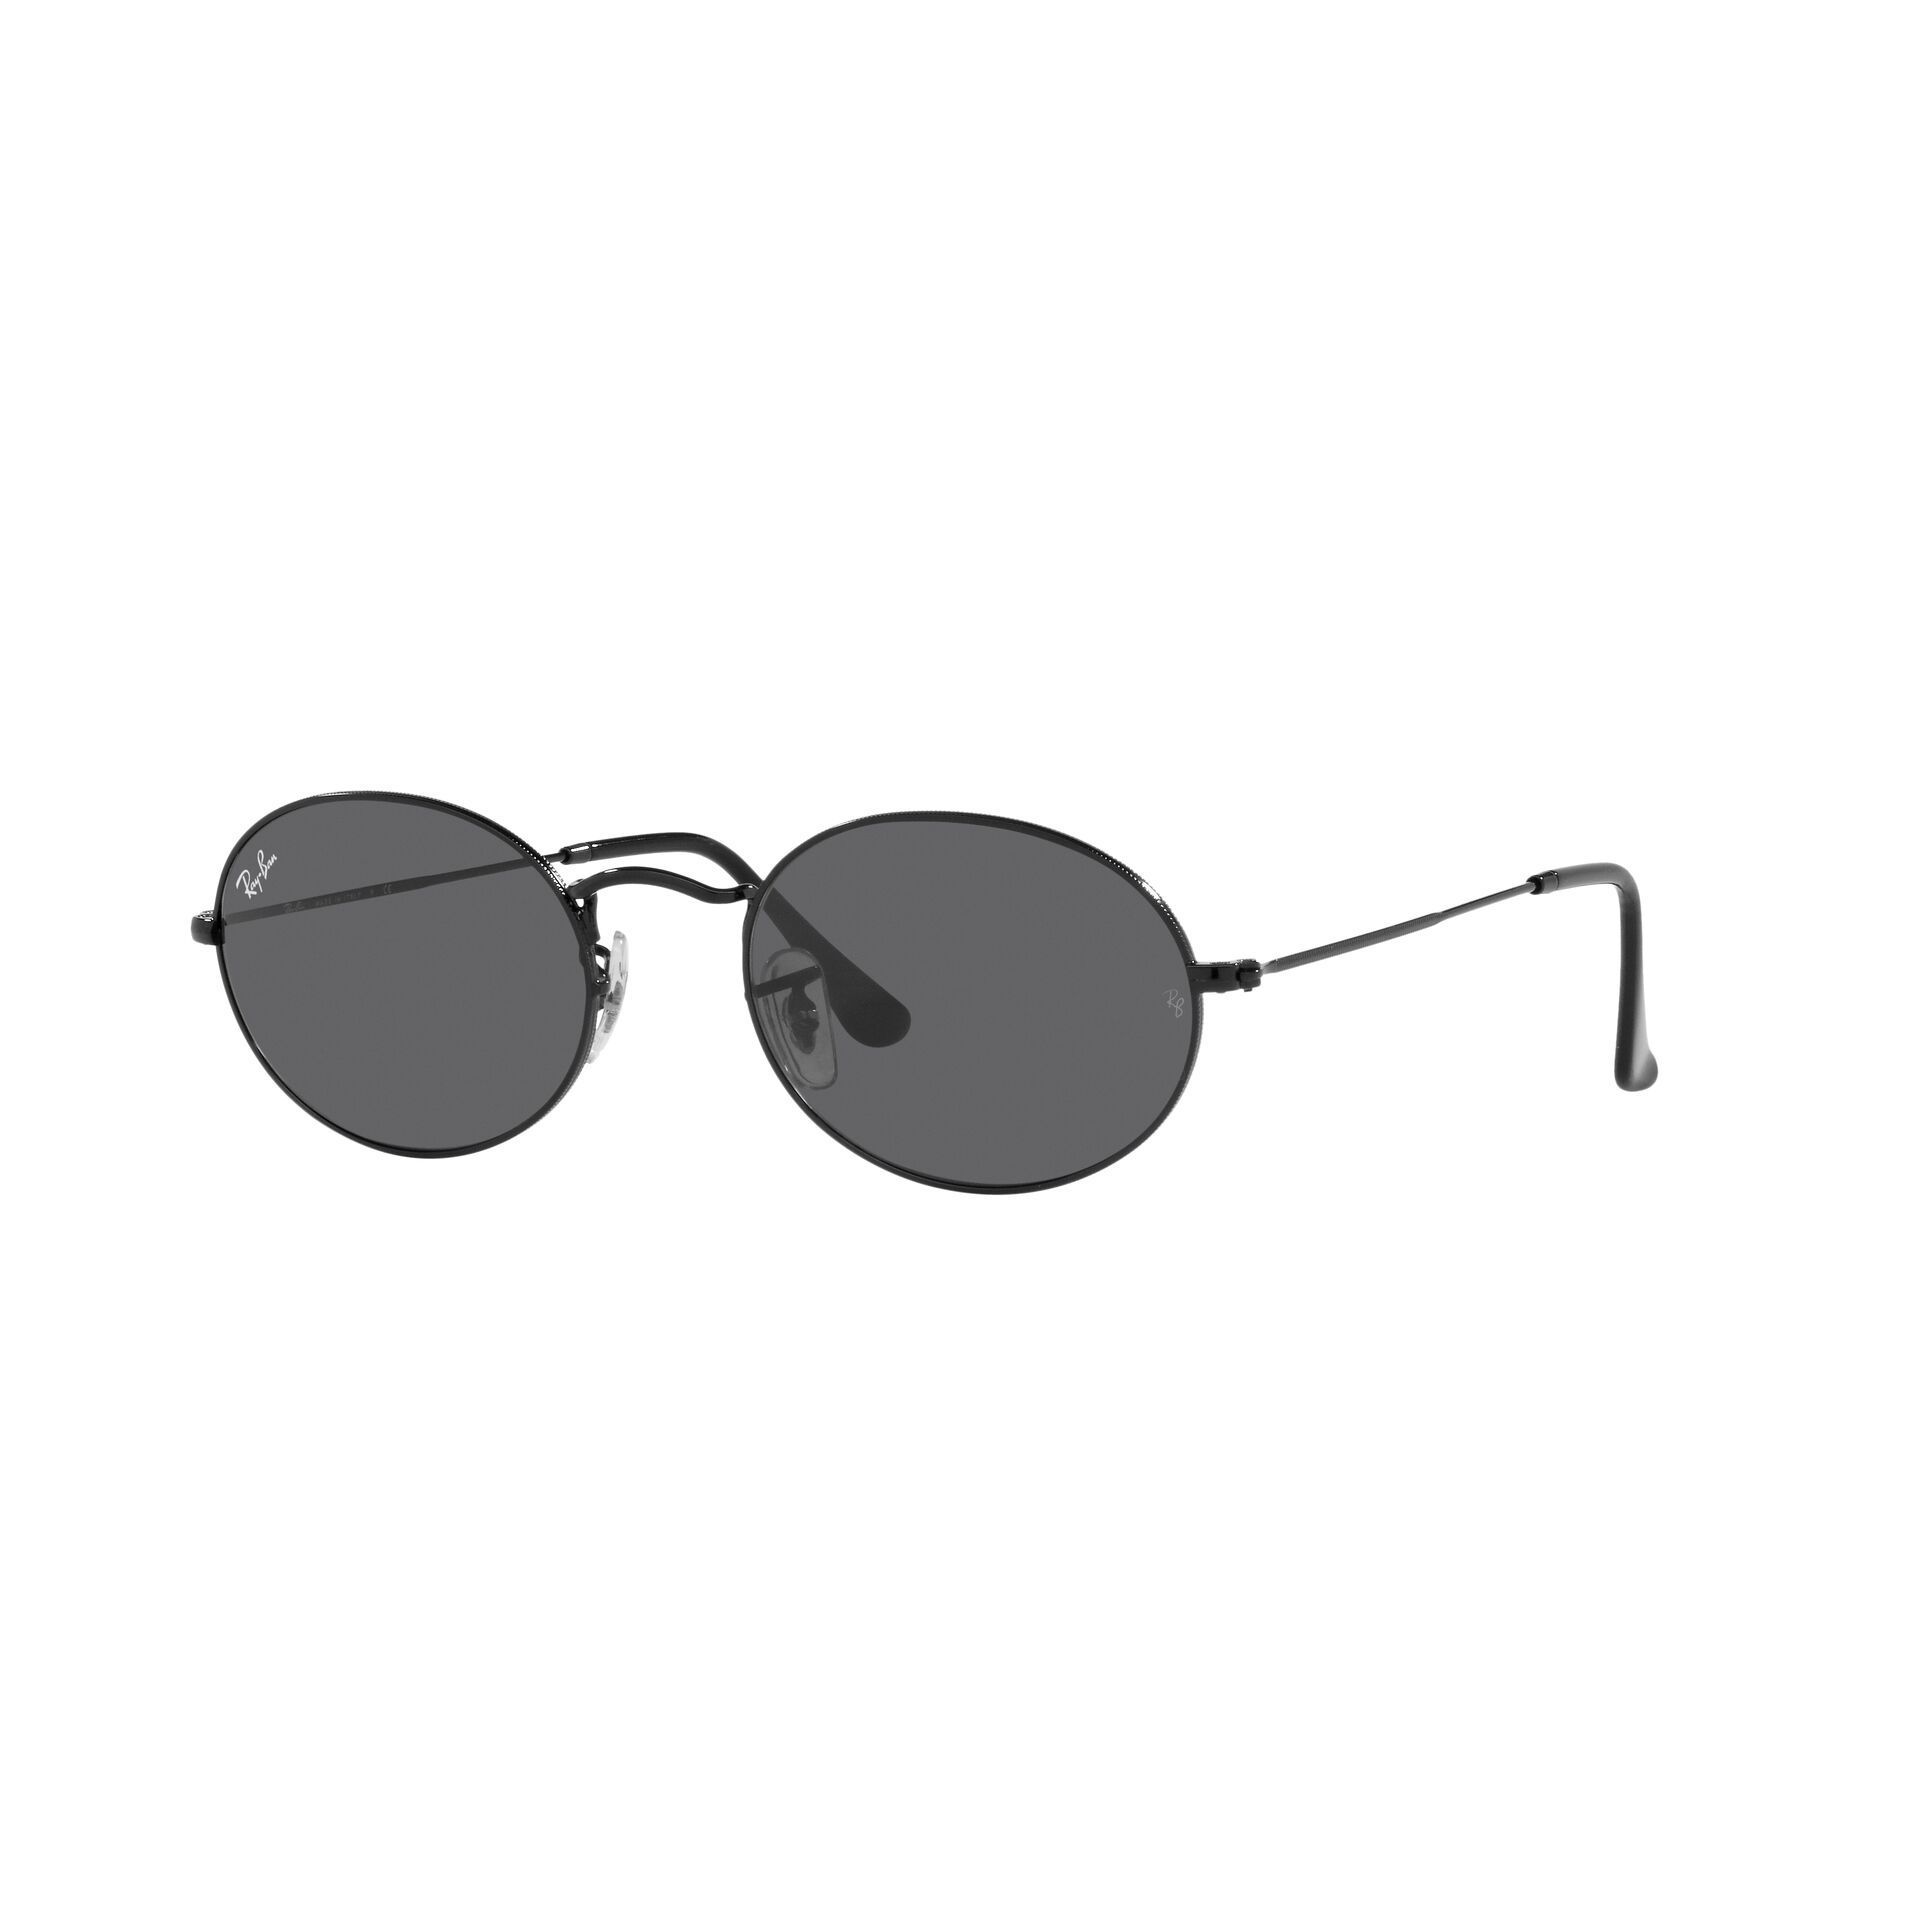 Oval  Sunglasses RB3547 002 B1 - size 51